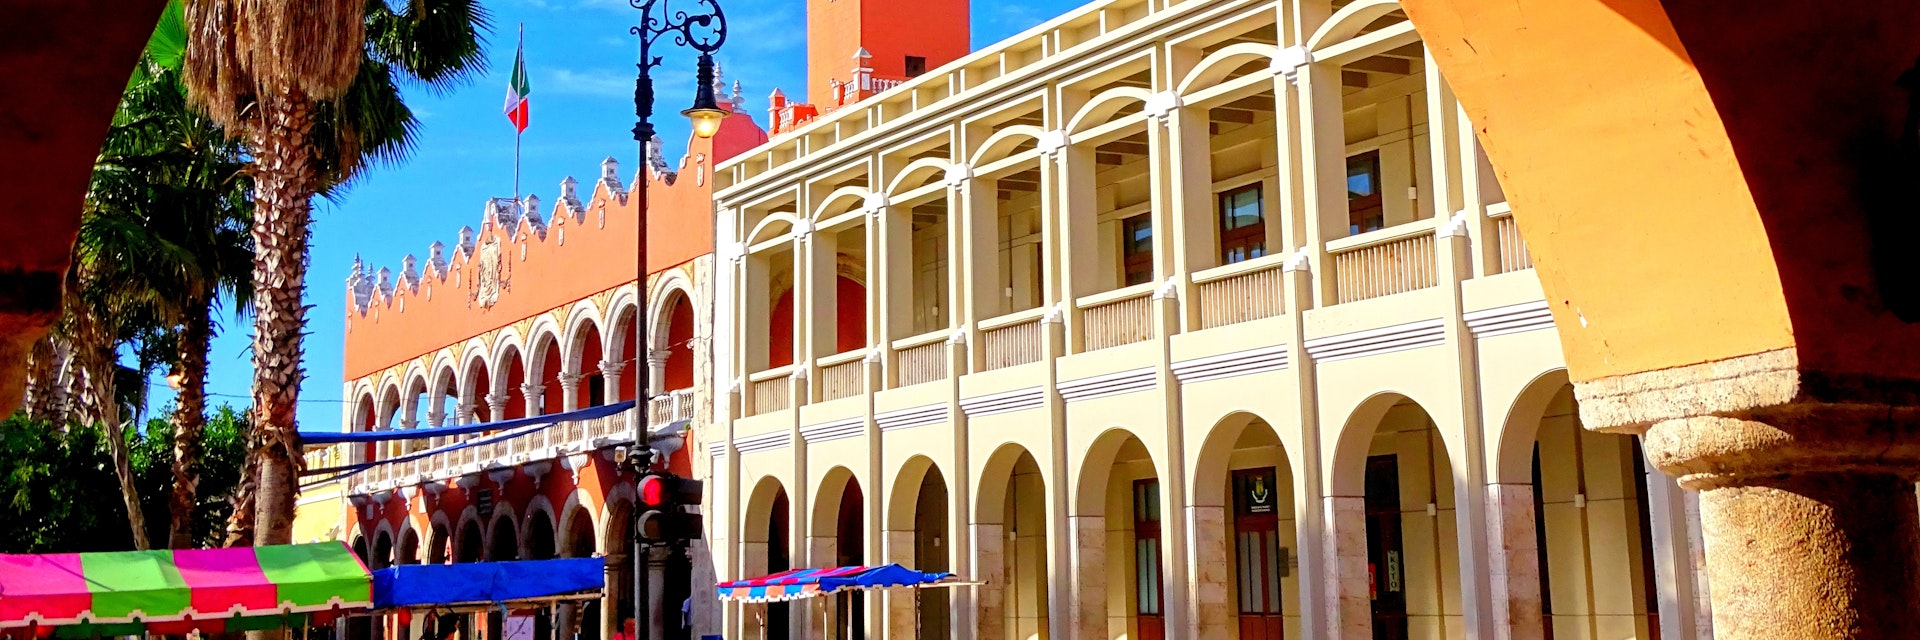 City Hall in Mérida.
